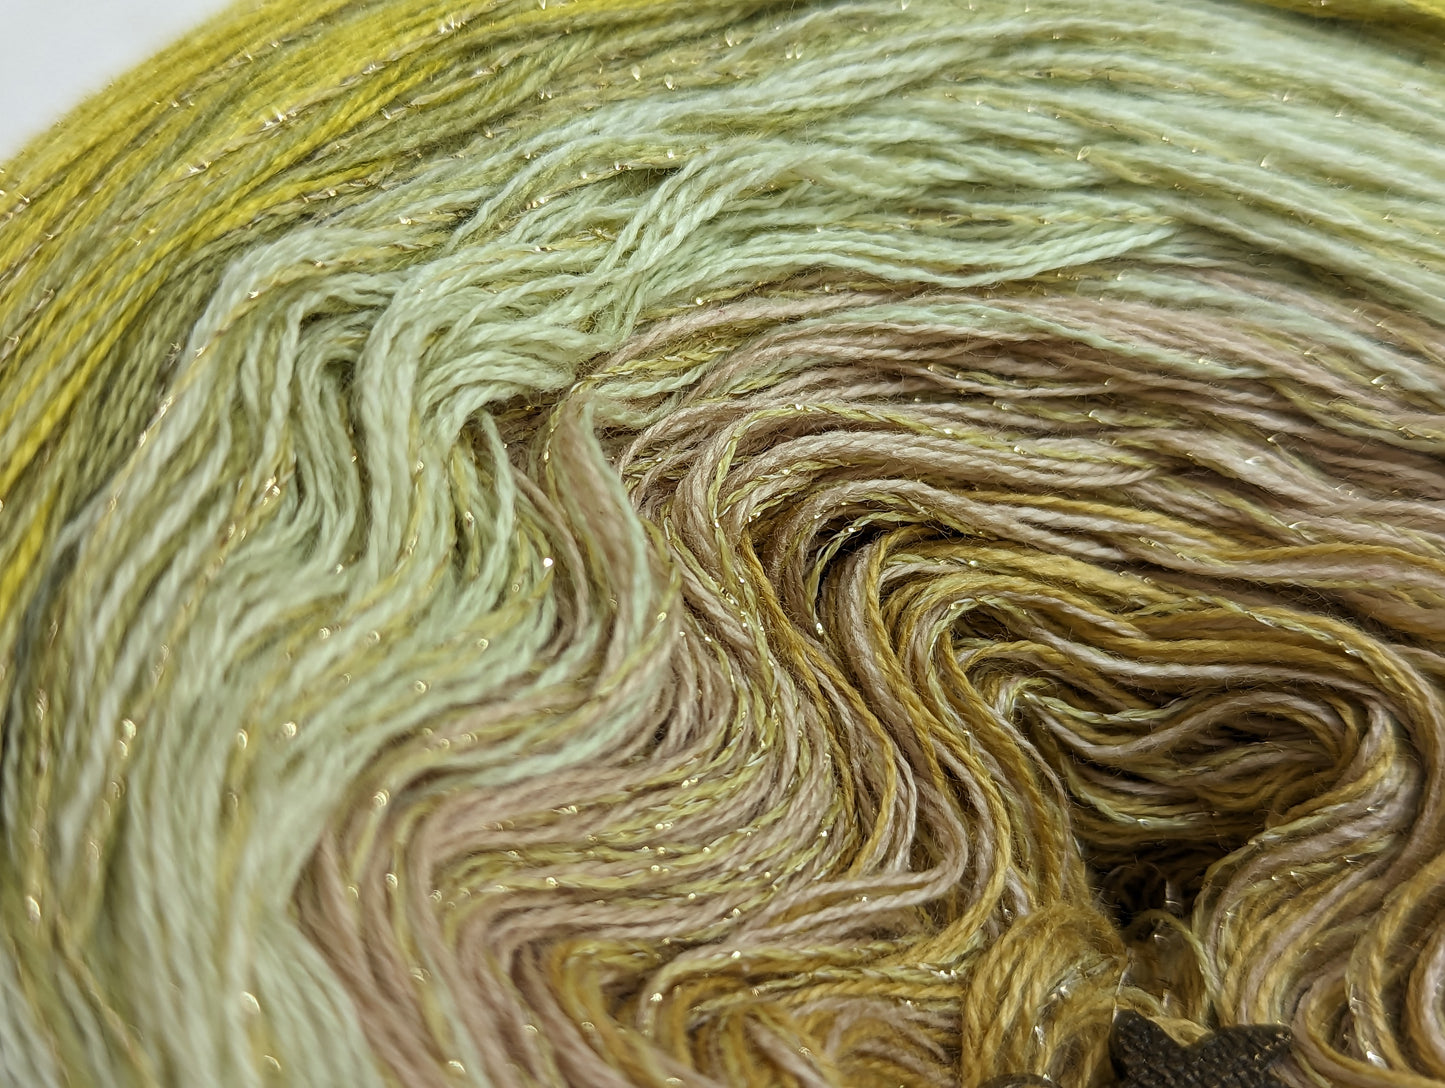 "Beach grass" cotton/acrylic ombre yarn cake